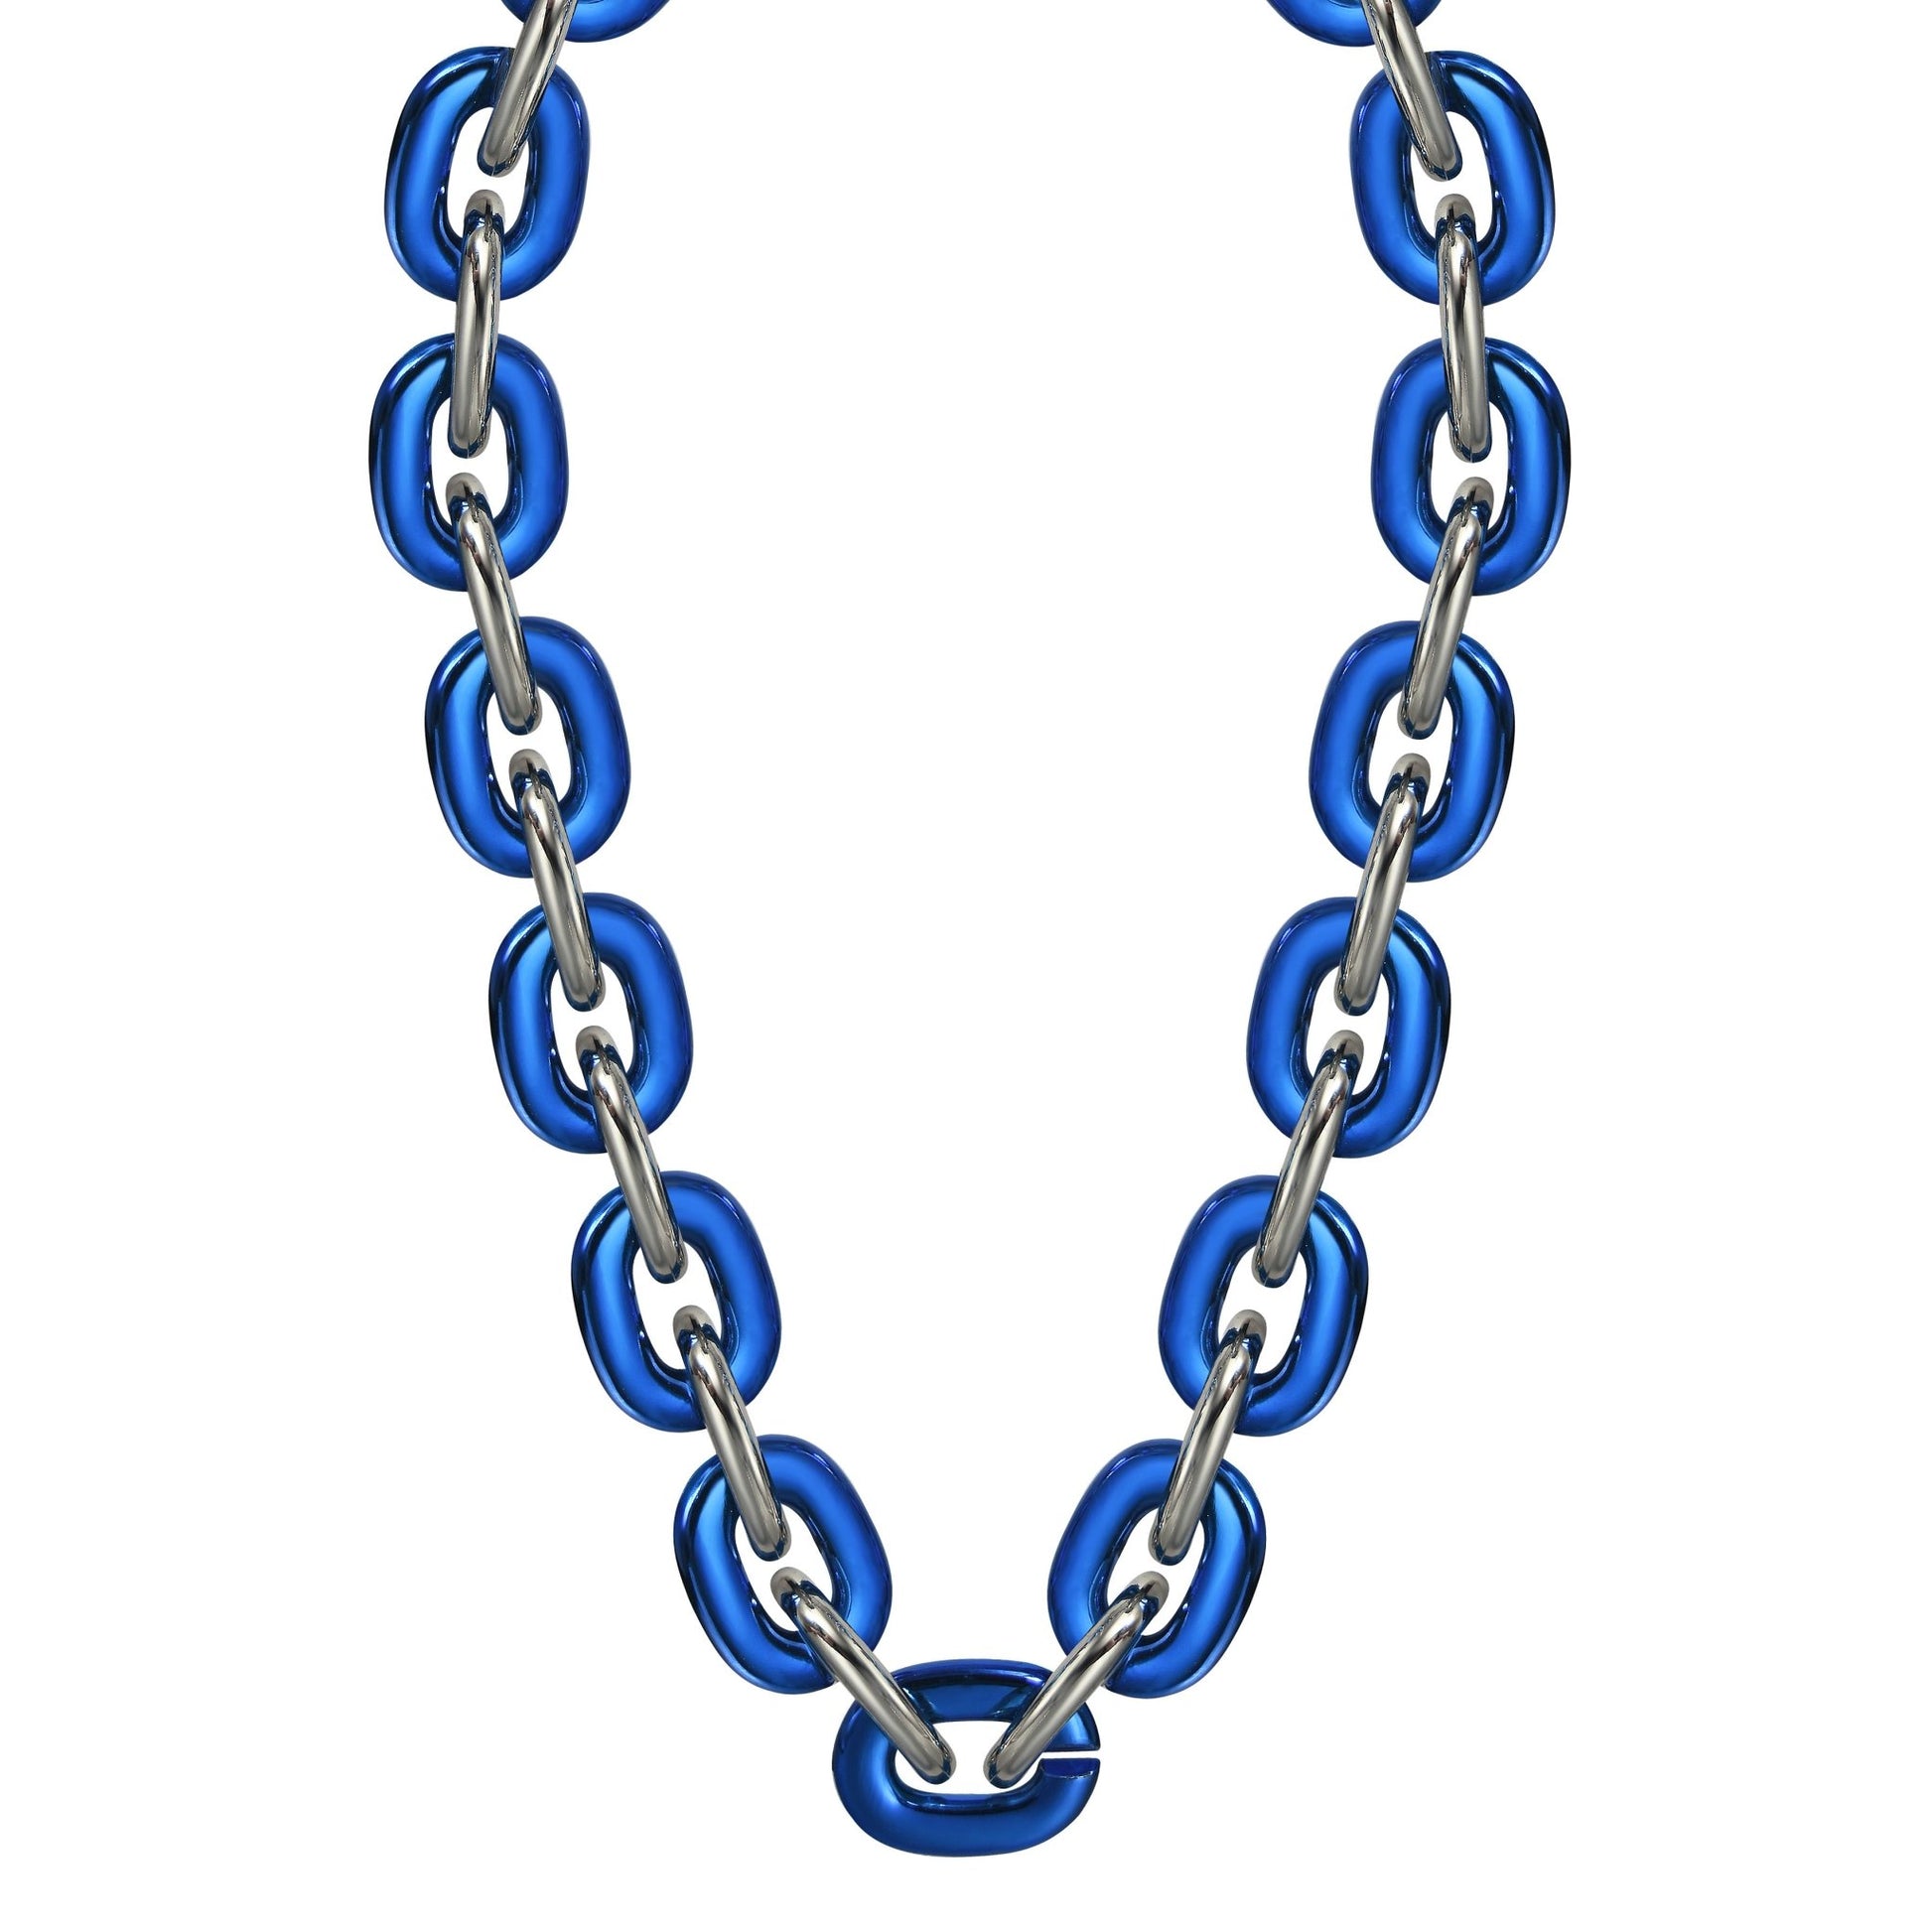 Jumbo Fan Chain Necklace - Gamedays Gear - Royal Blue / Silver